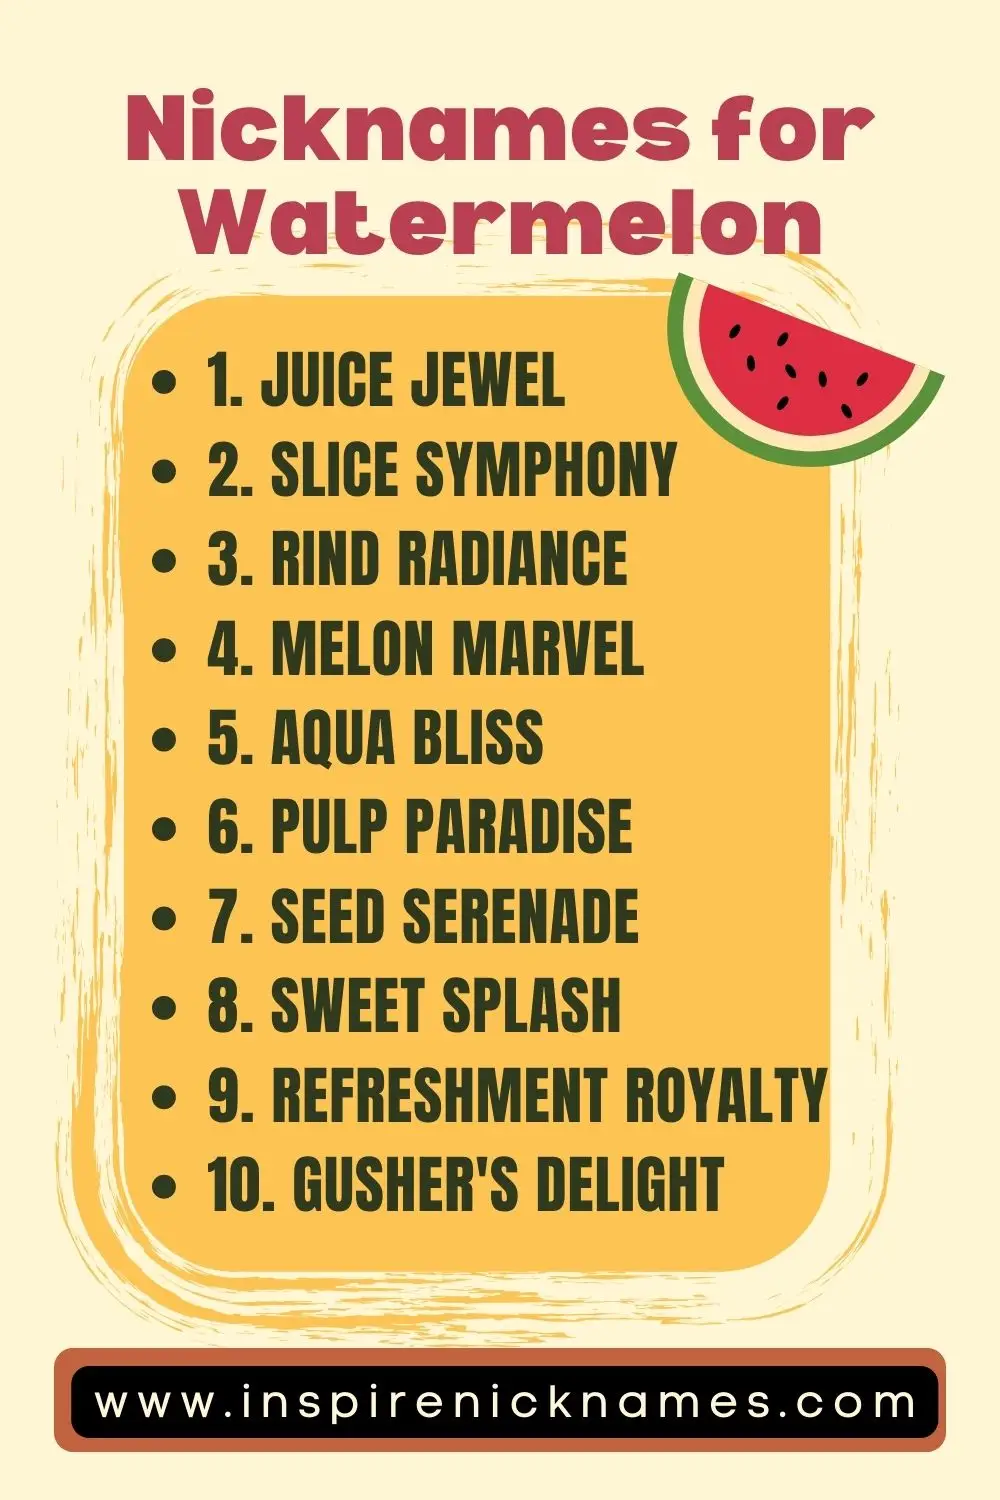 nicknames for watermelon list ideas